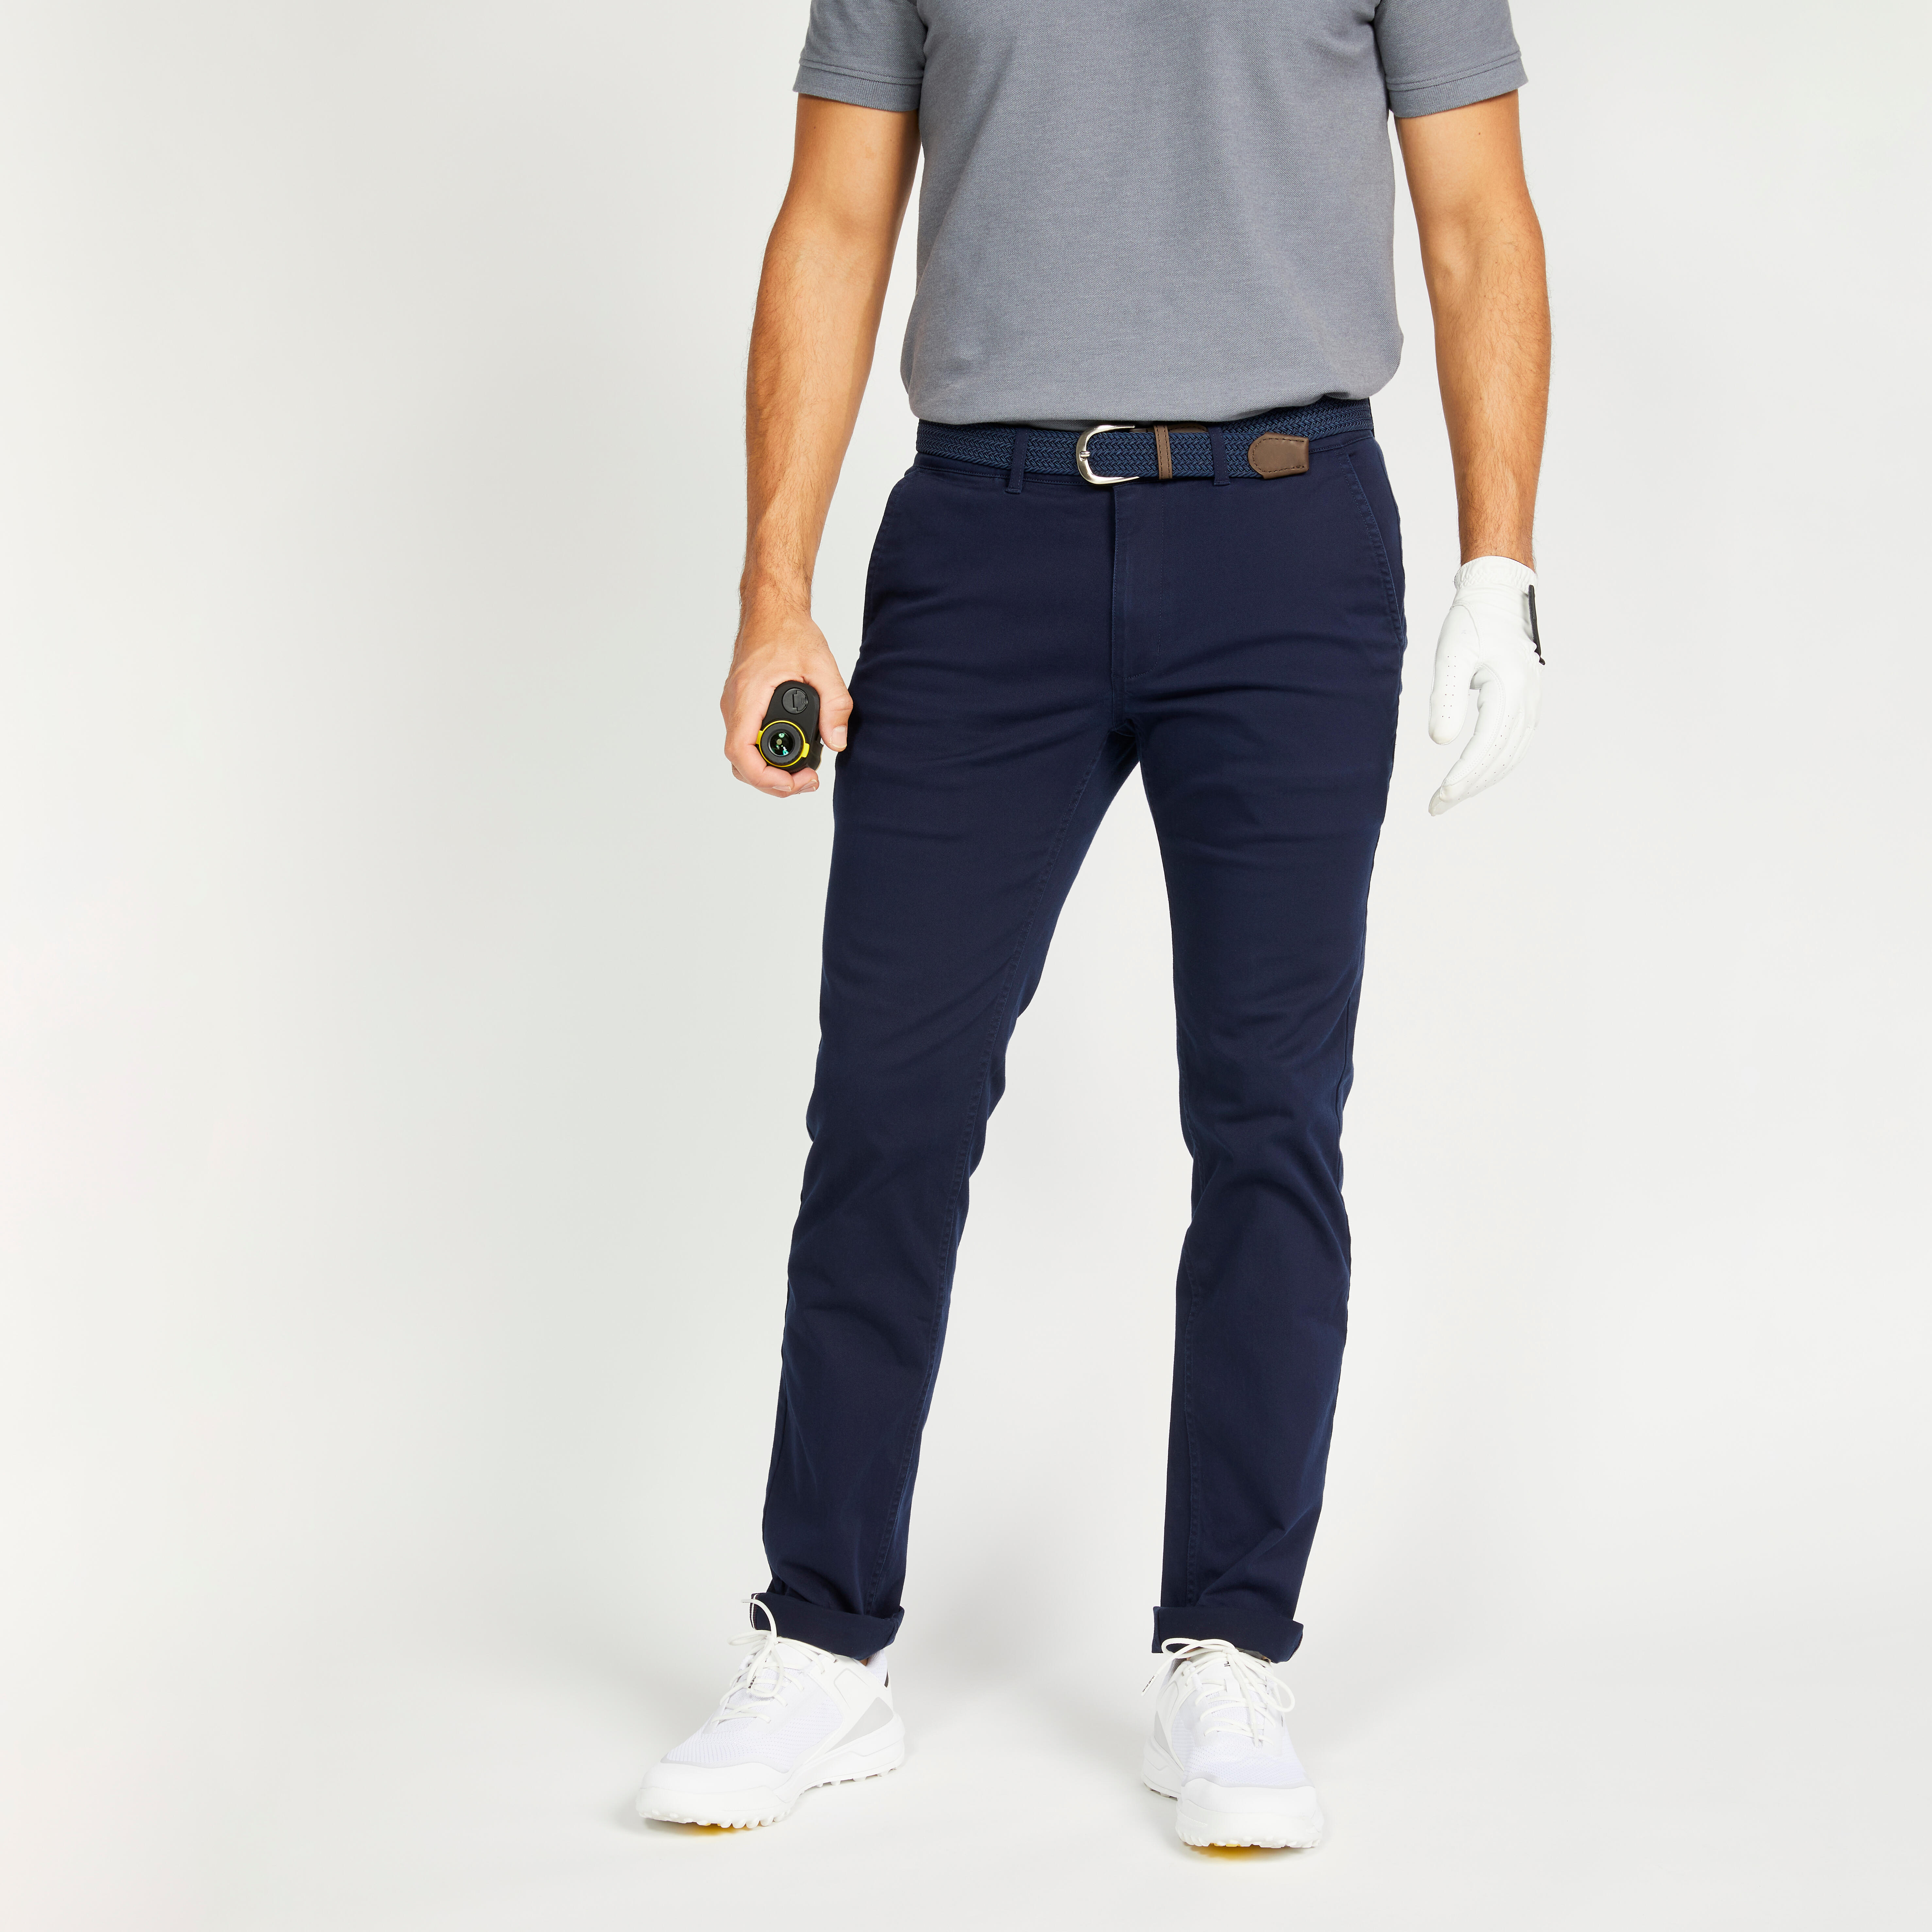 Pantalon Golf Mw500 Bleumarin Barbati